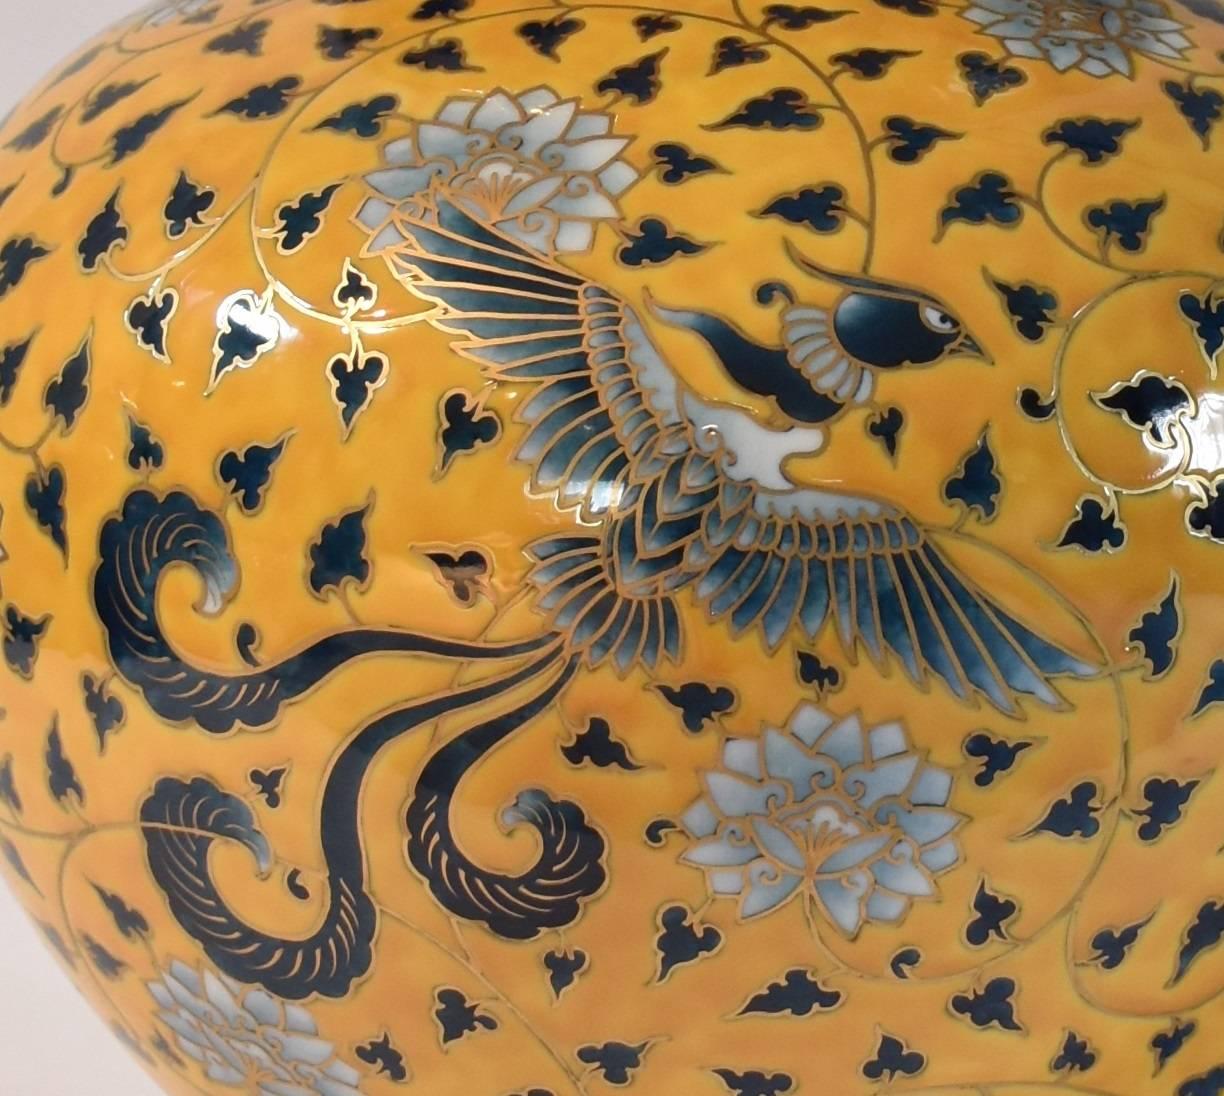 Gilt Japanese Large Contemporary Yellow Gilded Imari Ceramic Vase by Master Artist